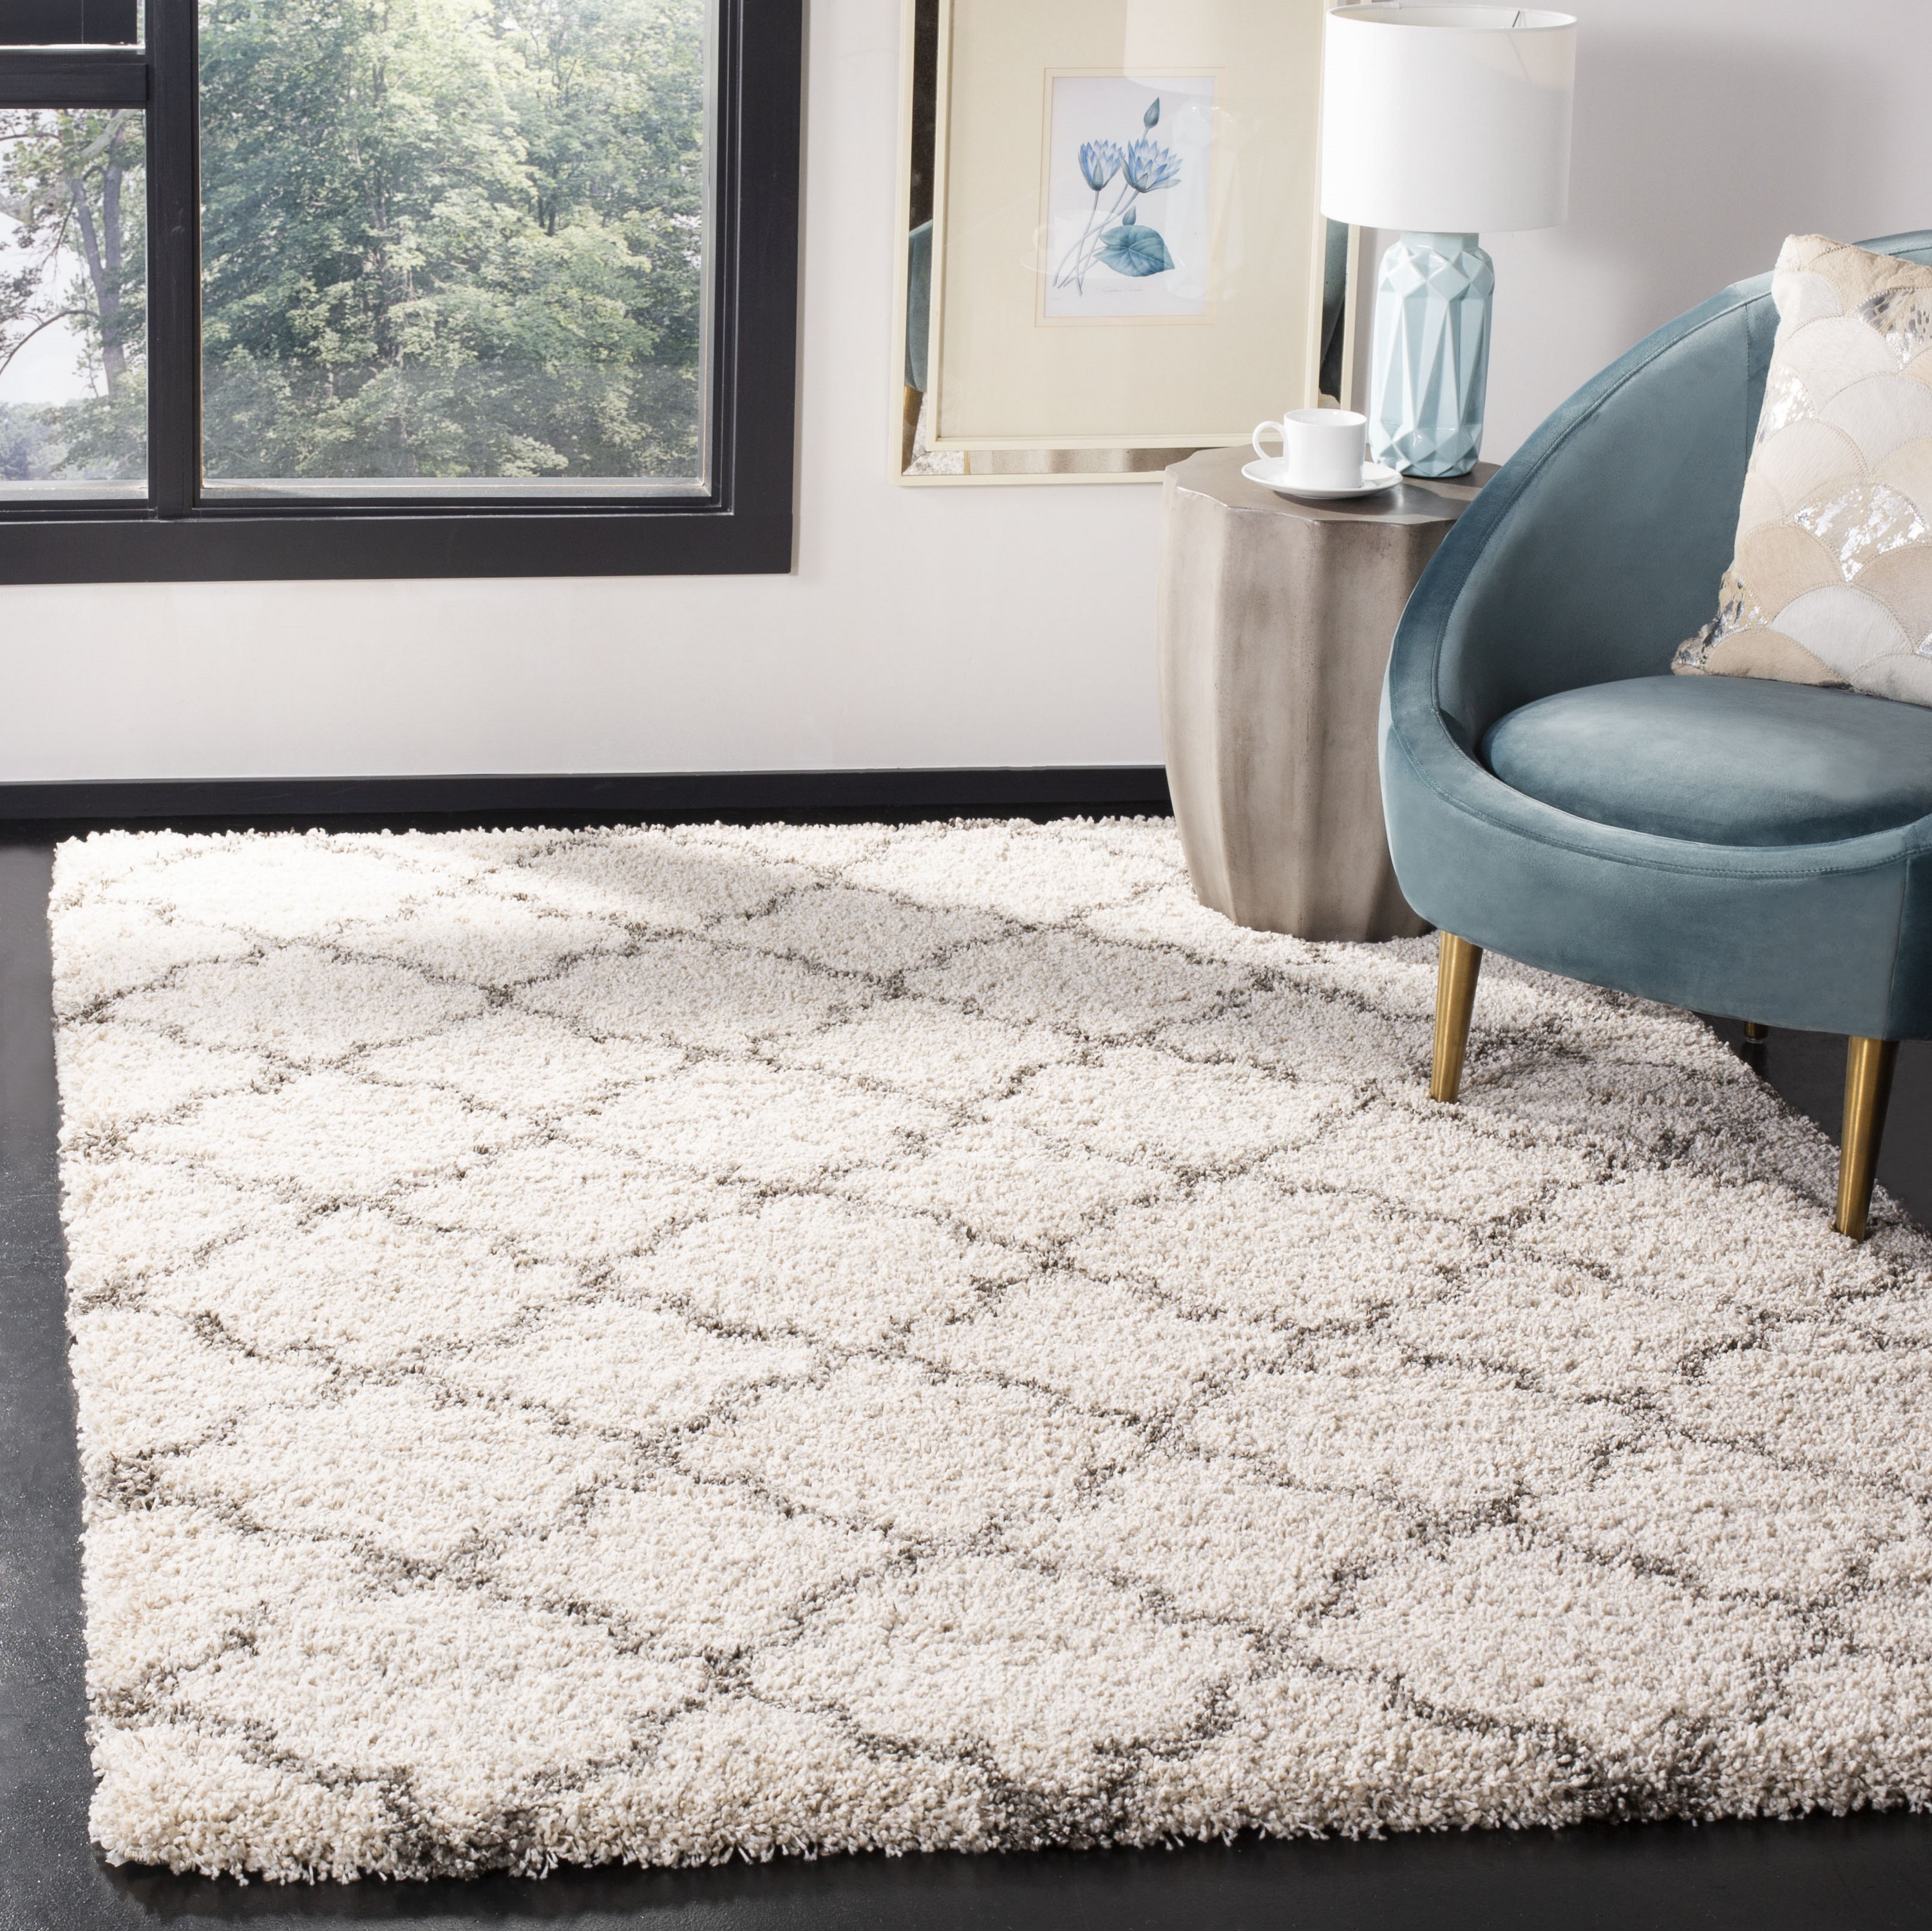 Safavieh Premium Rug Pad for Hardwood floor and Carpet, Gray